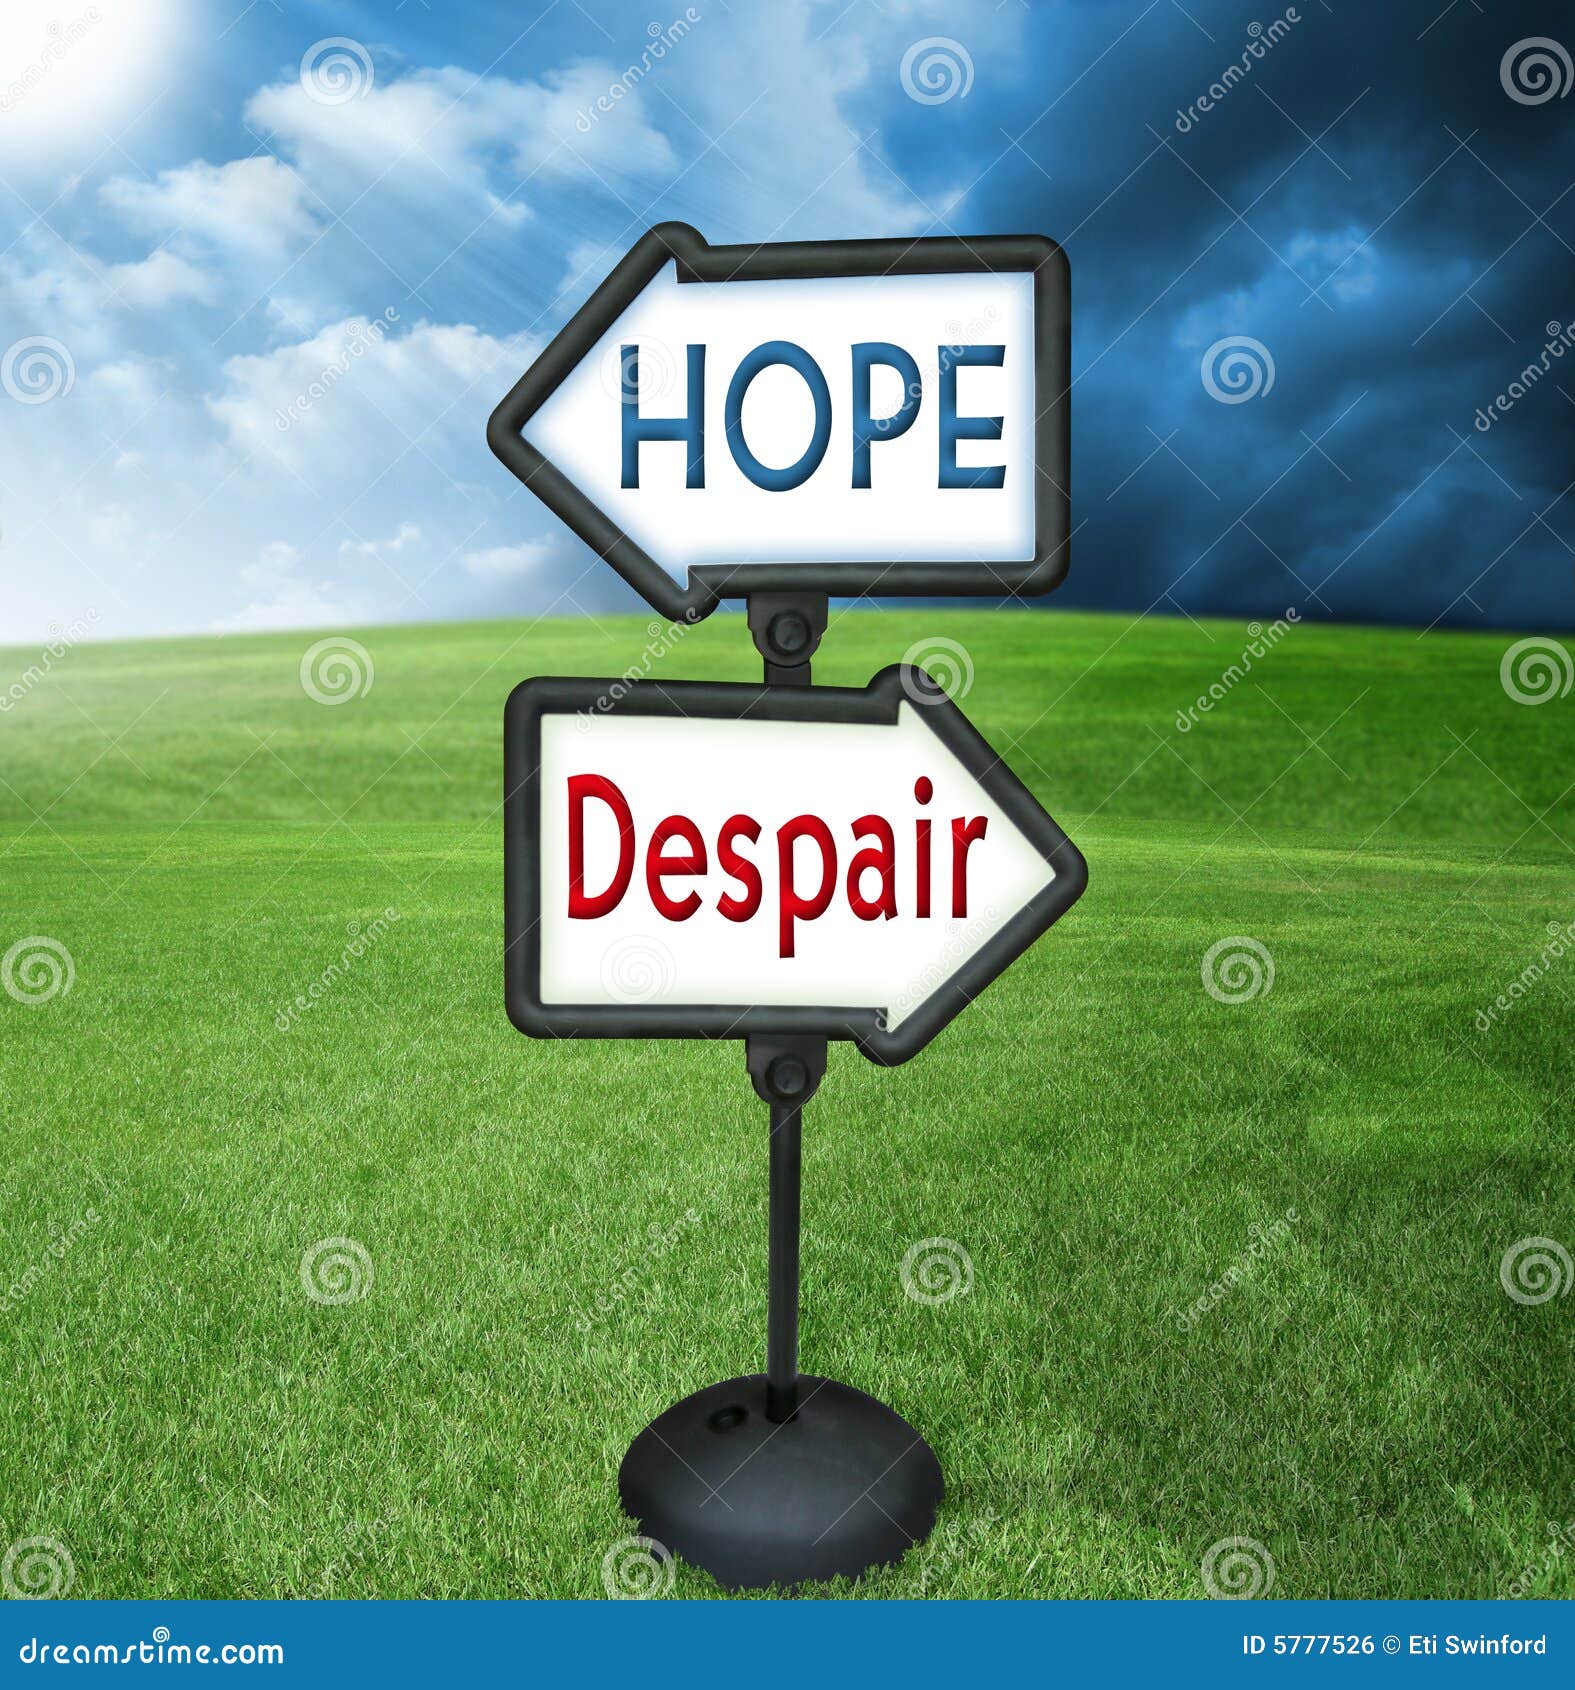 hope and despair